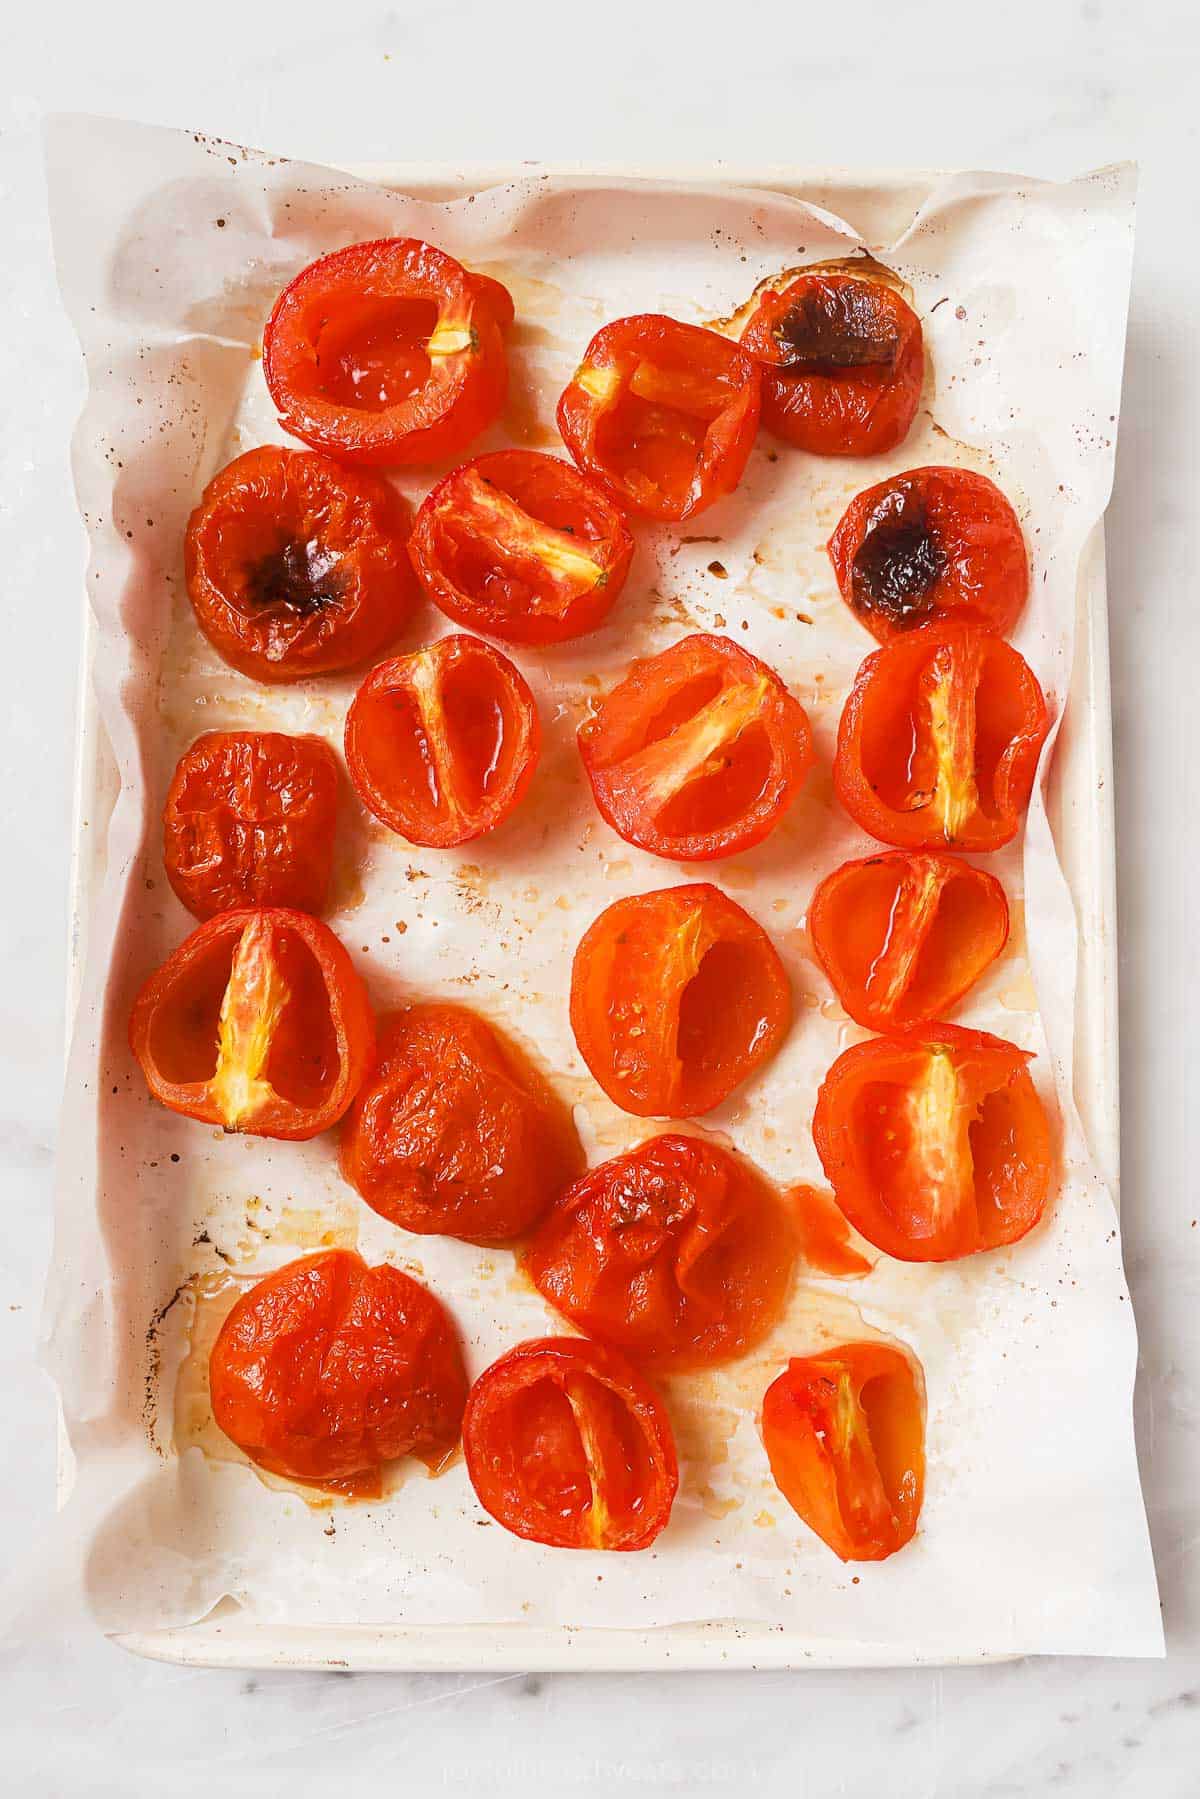 Roasted tomatoes on the baking sheet. 